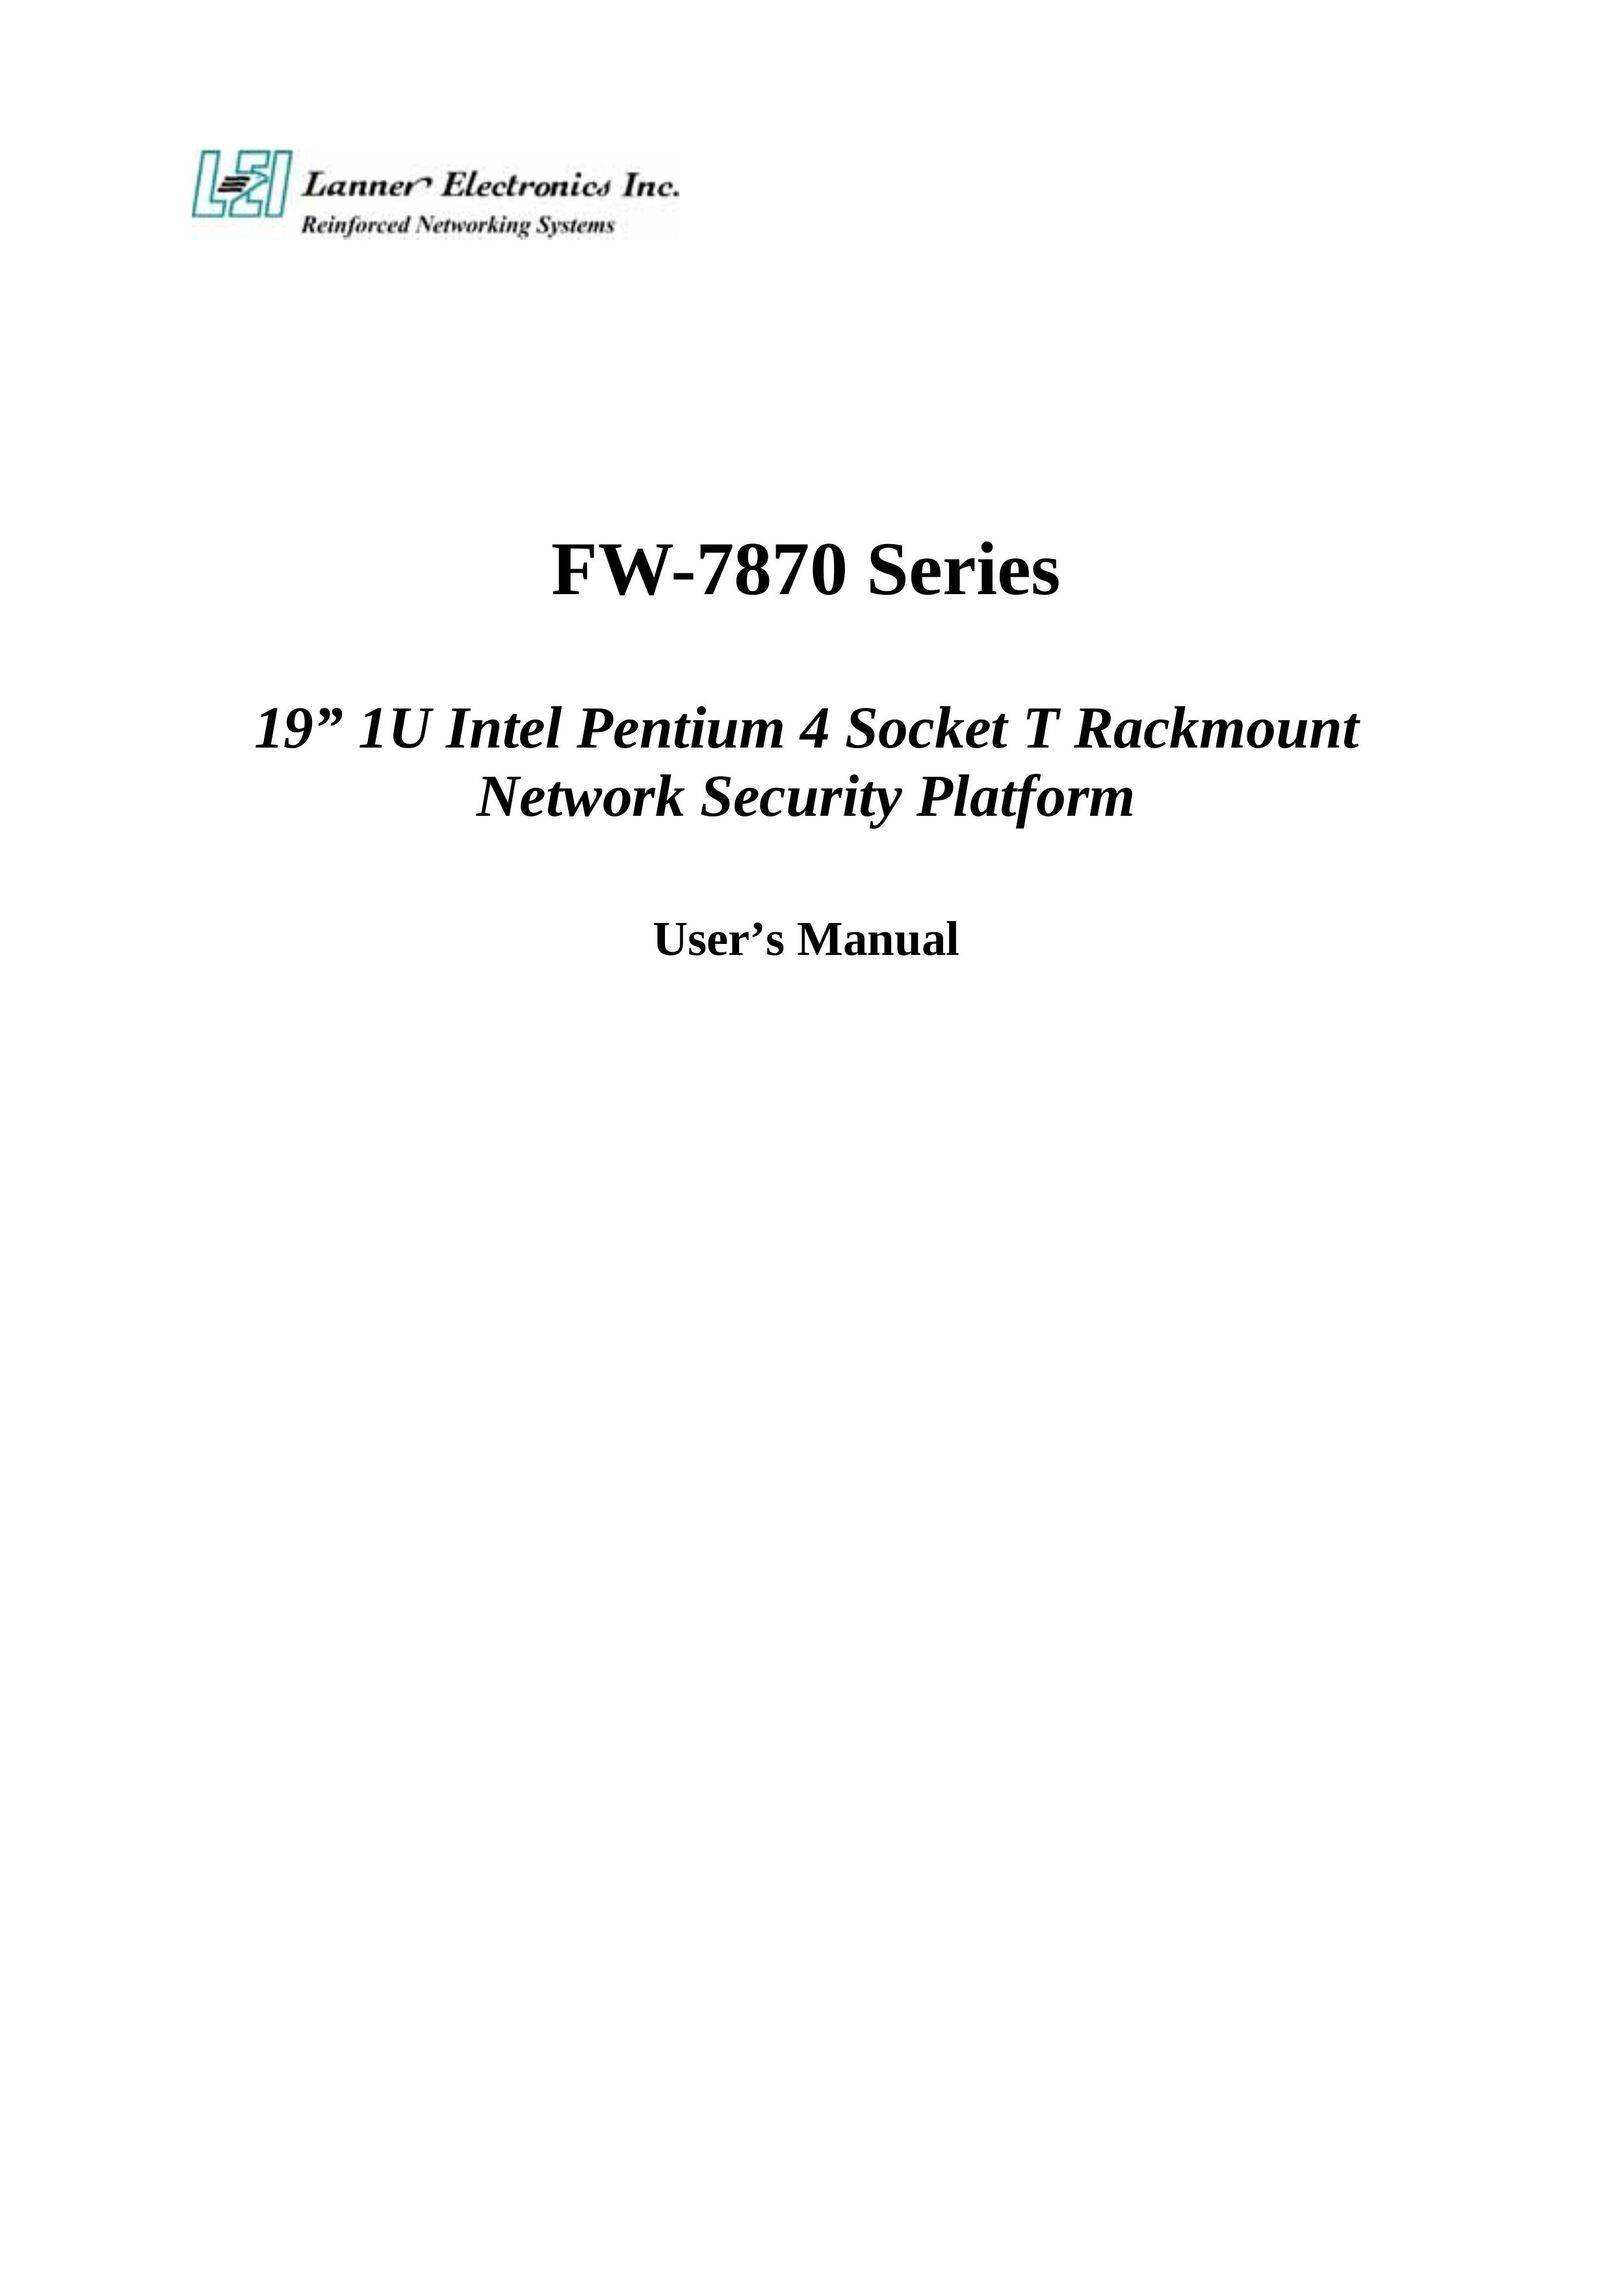 Lanner electronic 19" 1U Intel Pentium 4 Socket T Rackmount Network Security Platform Network Hardware User Manual